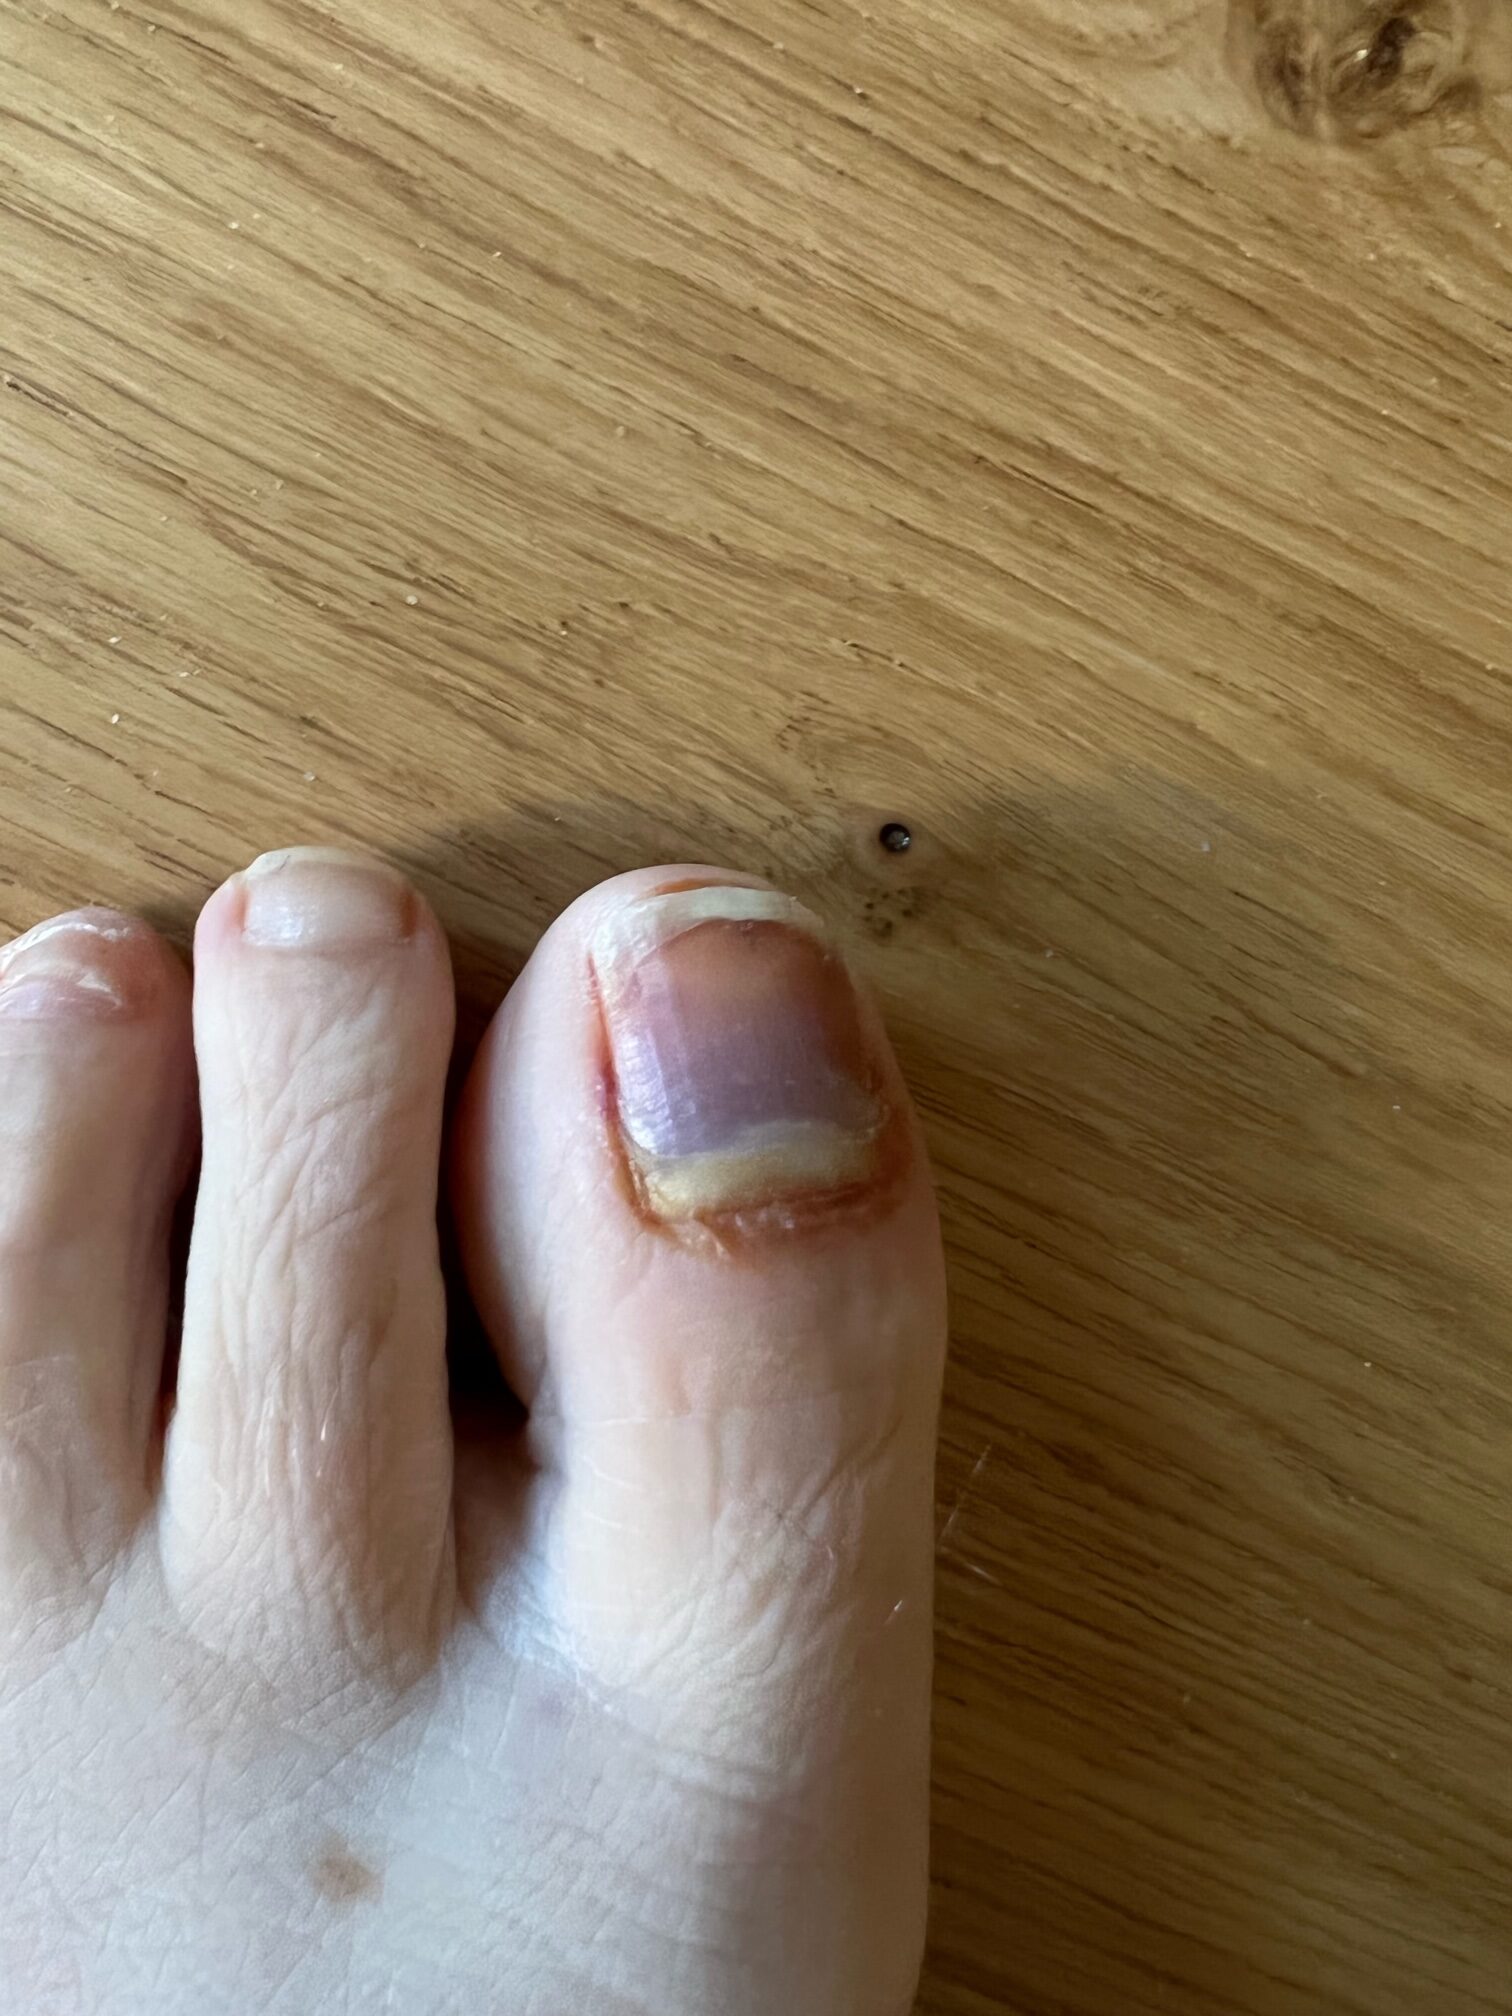 big toe showing deep bruising and bleeding